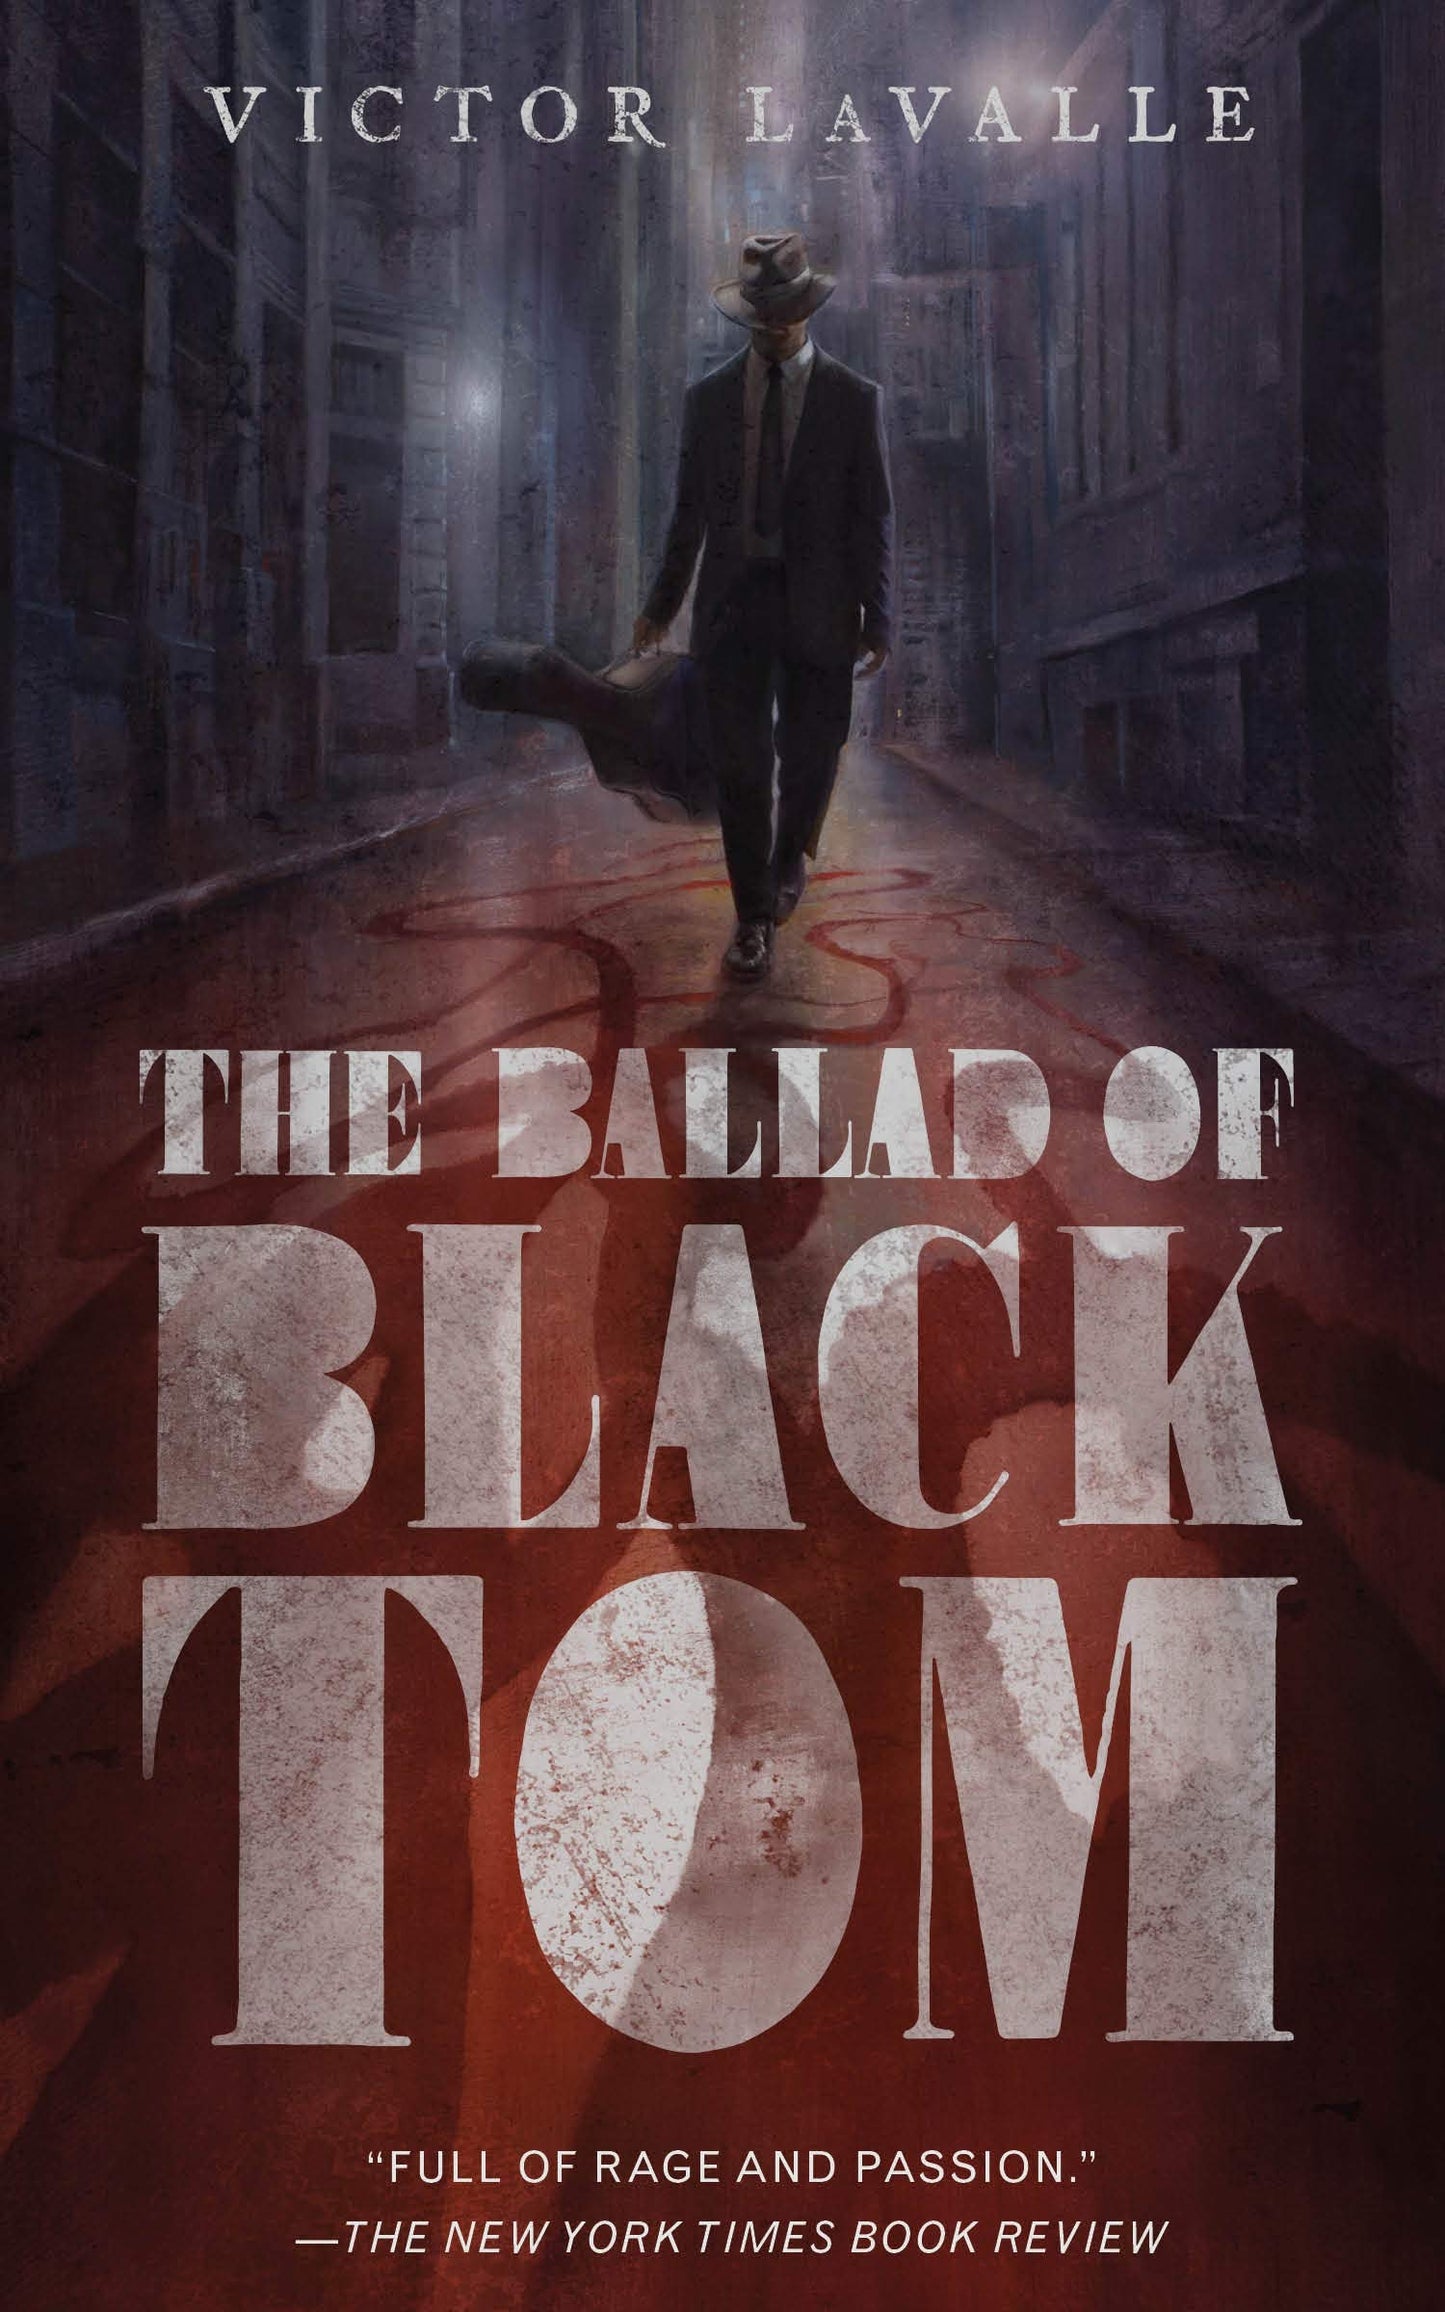 The Ballad of Black Tom